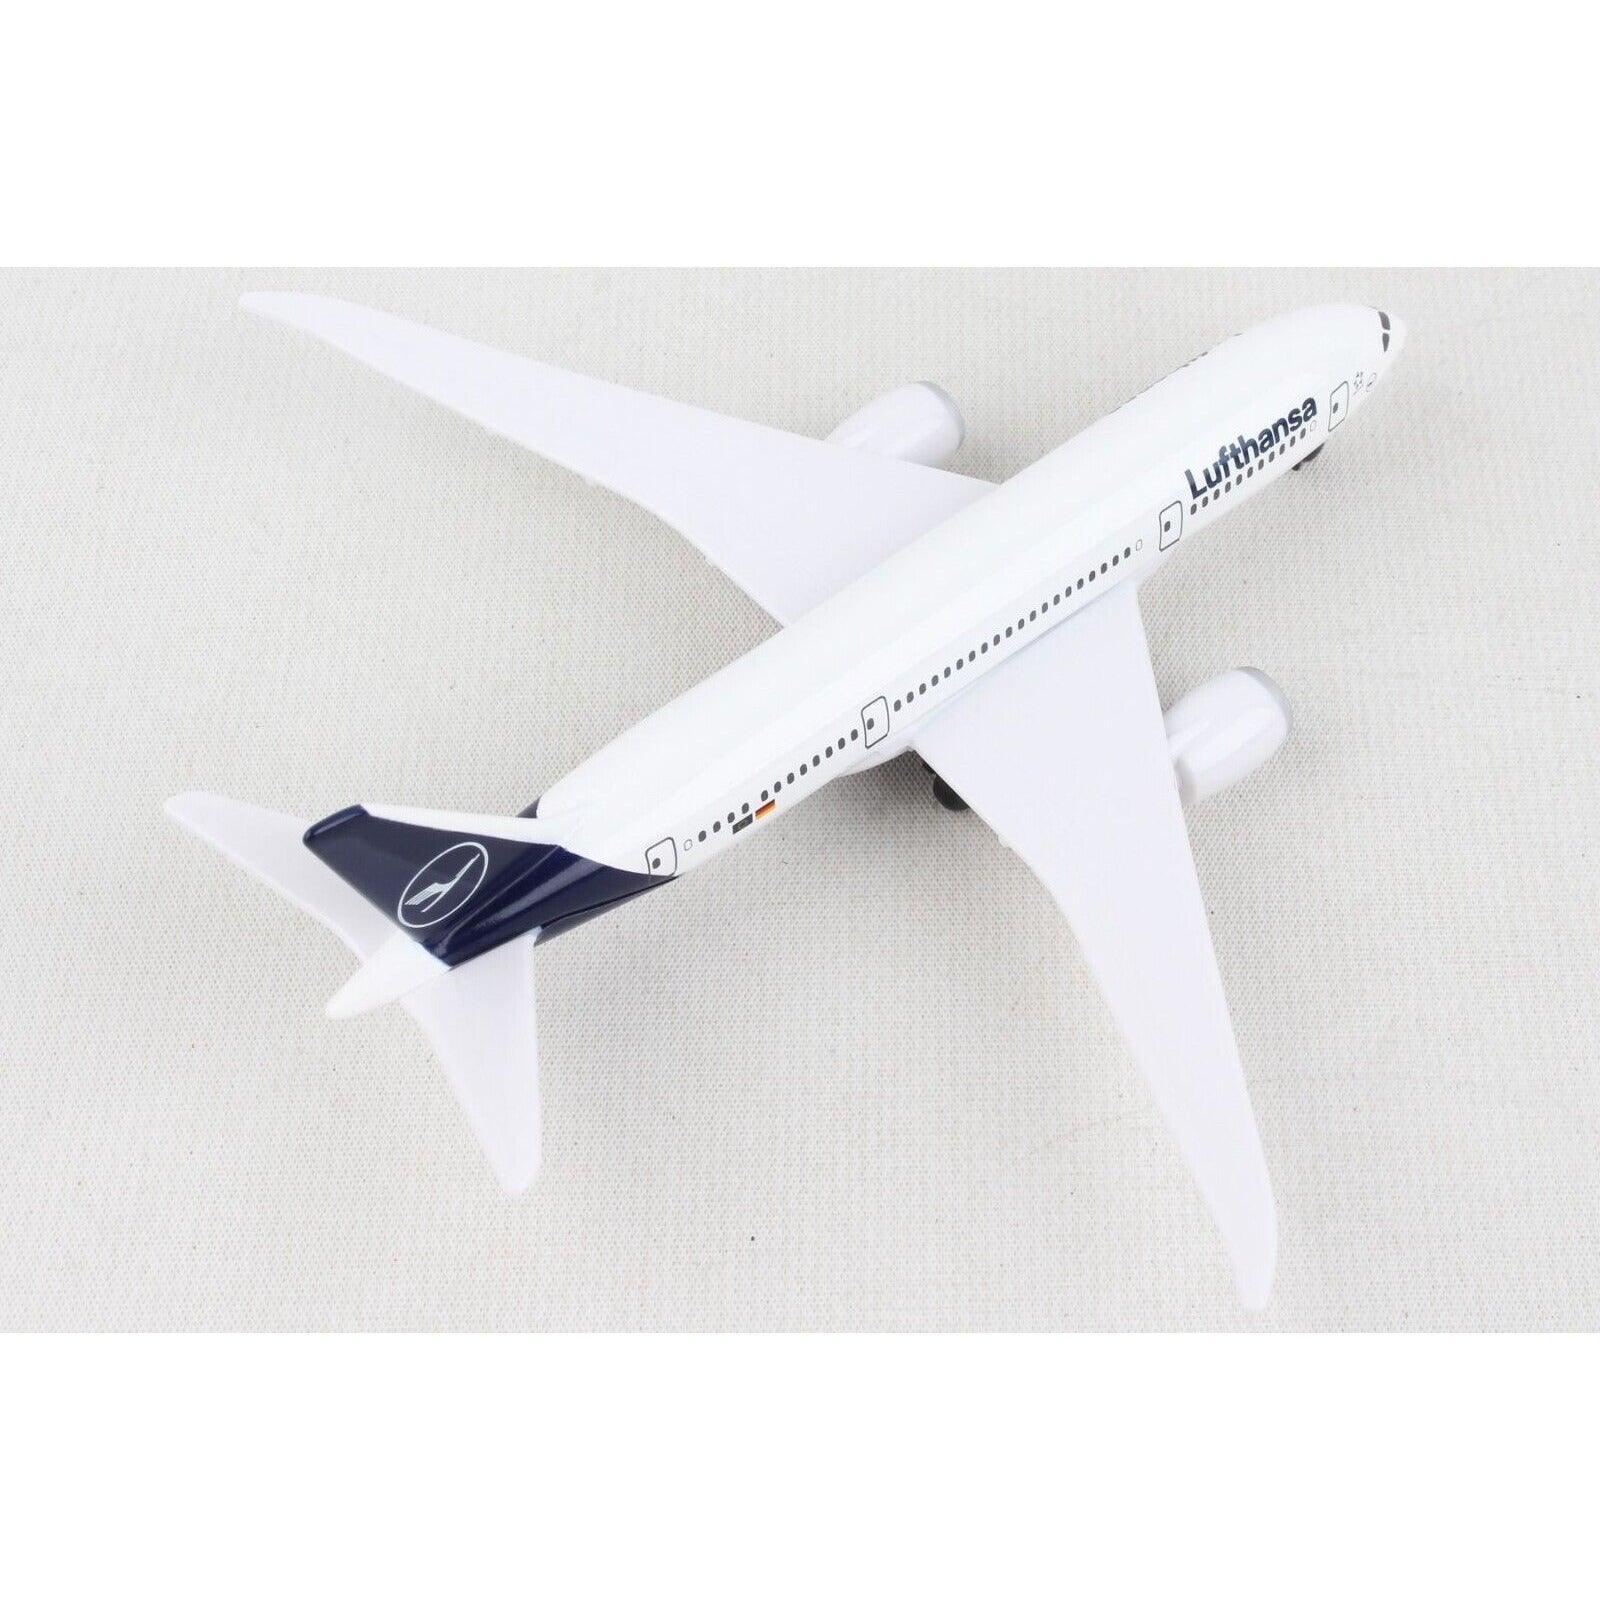 Daron Planes Lufthansa 787 Single Plane RT4136 - BumbleToys - 6+ Years, Boys, EXO, Flying, Girls, Pre-Order